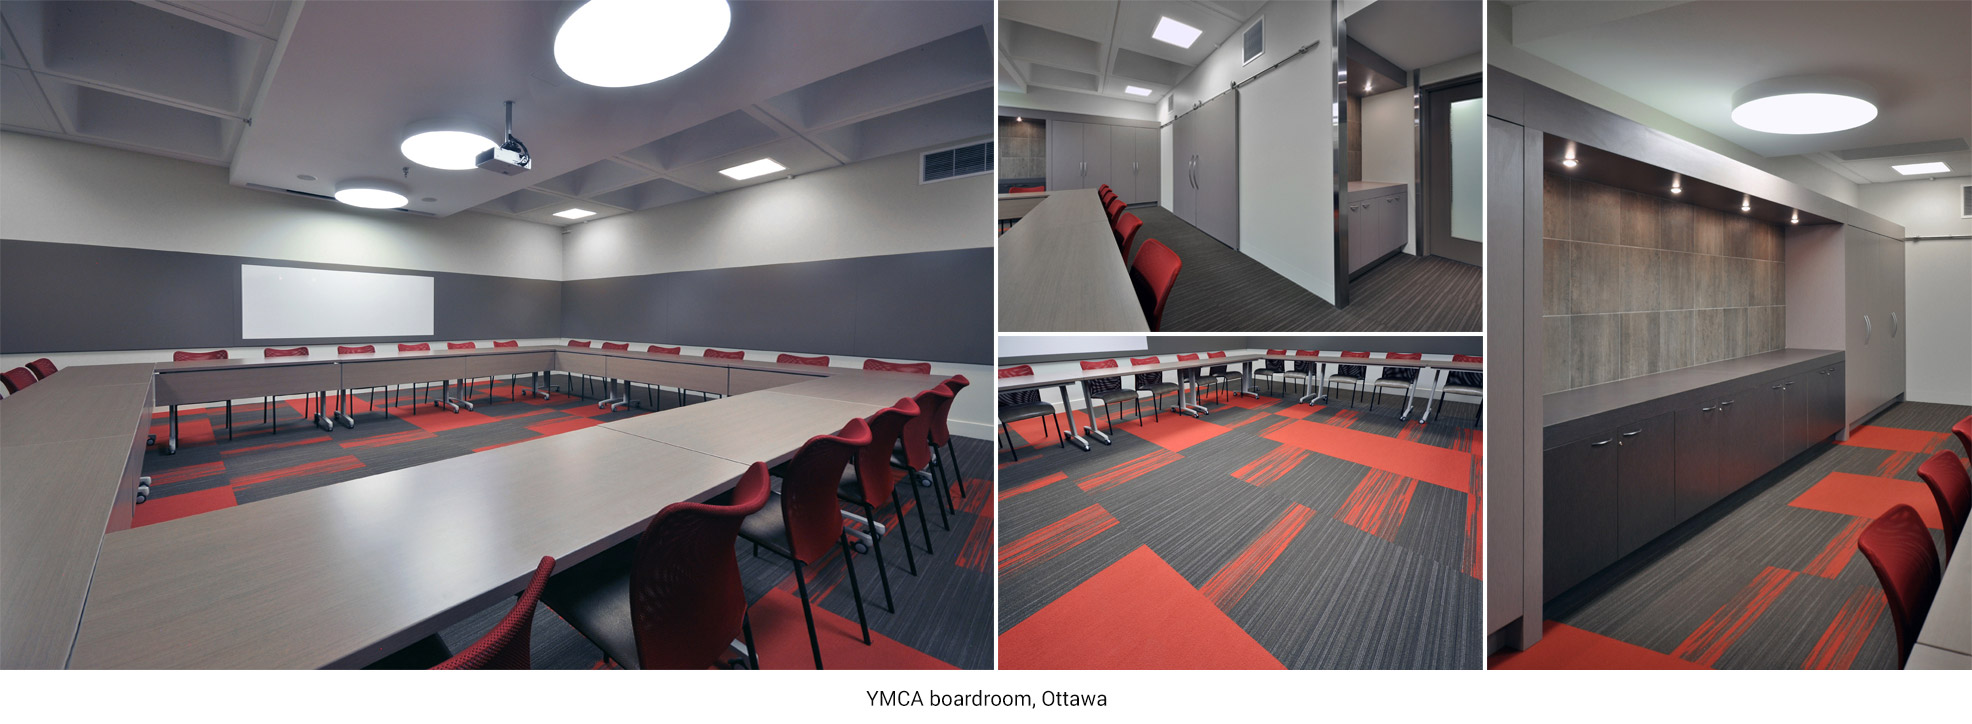 YMCA boardroom, Ottawa